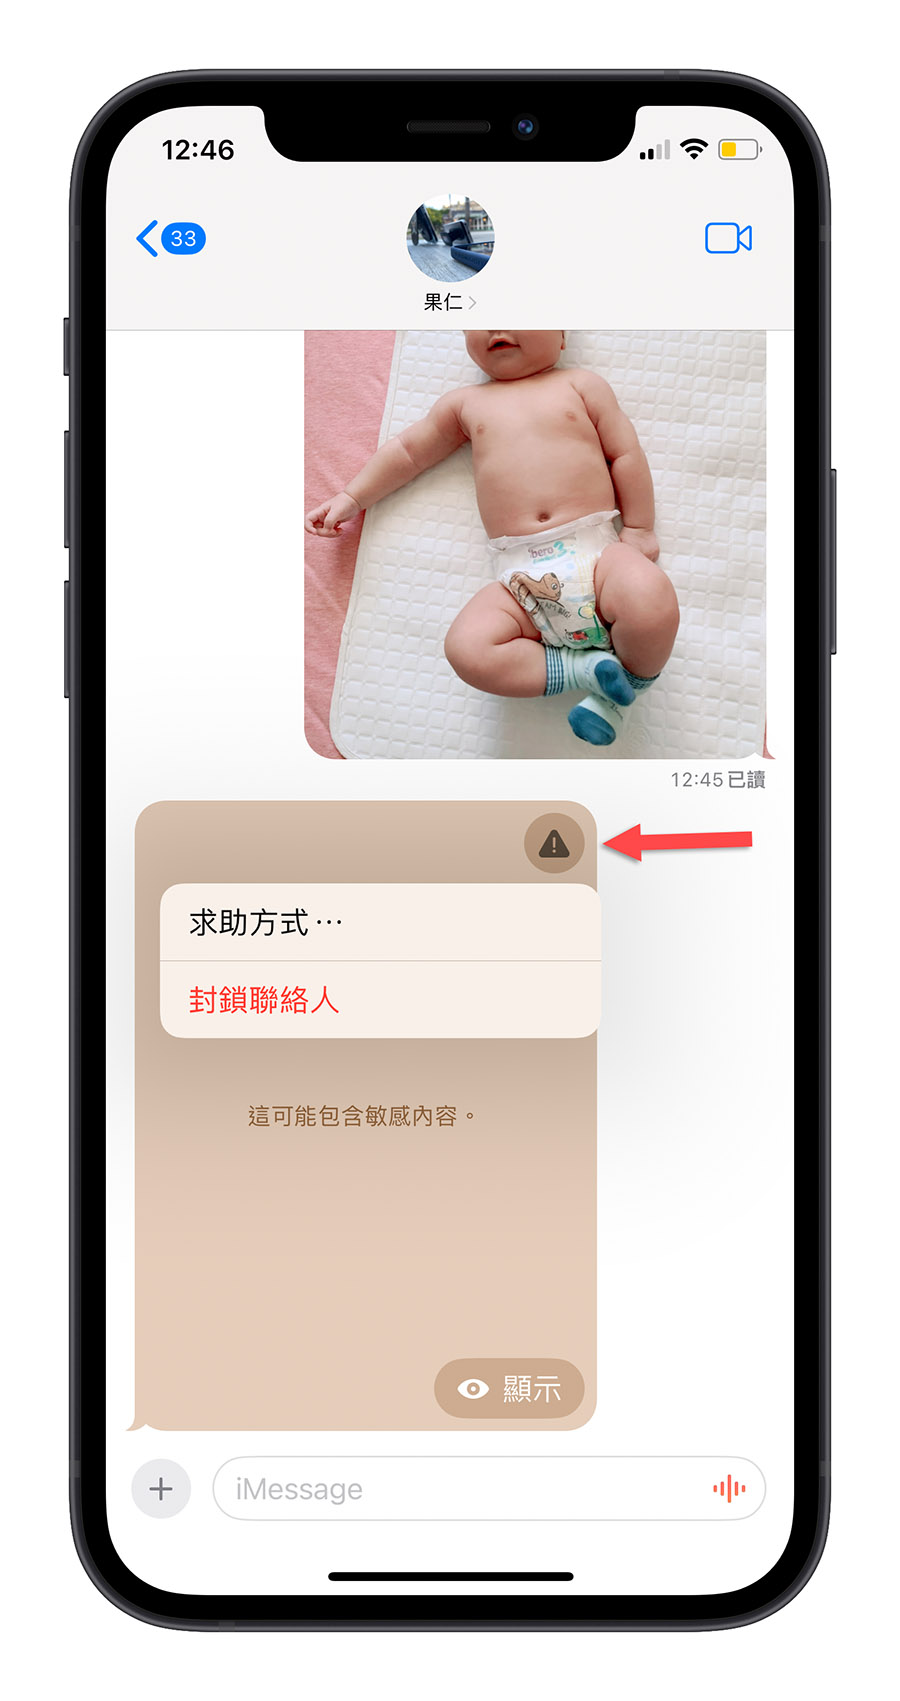 iPhone iOS 17 敏感性內容 AirDrop iMessages 簡訊 聯絡人海報